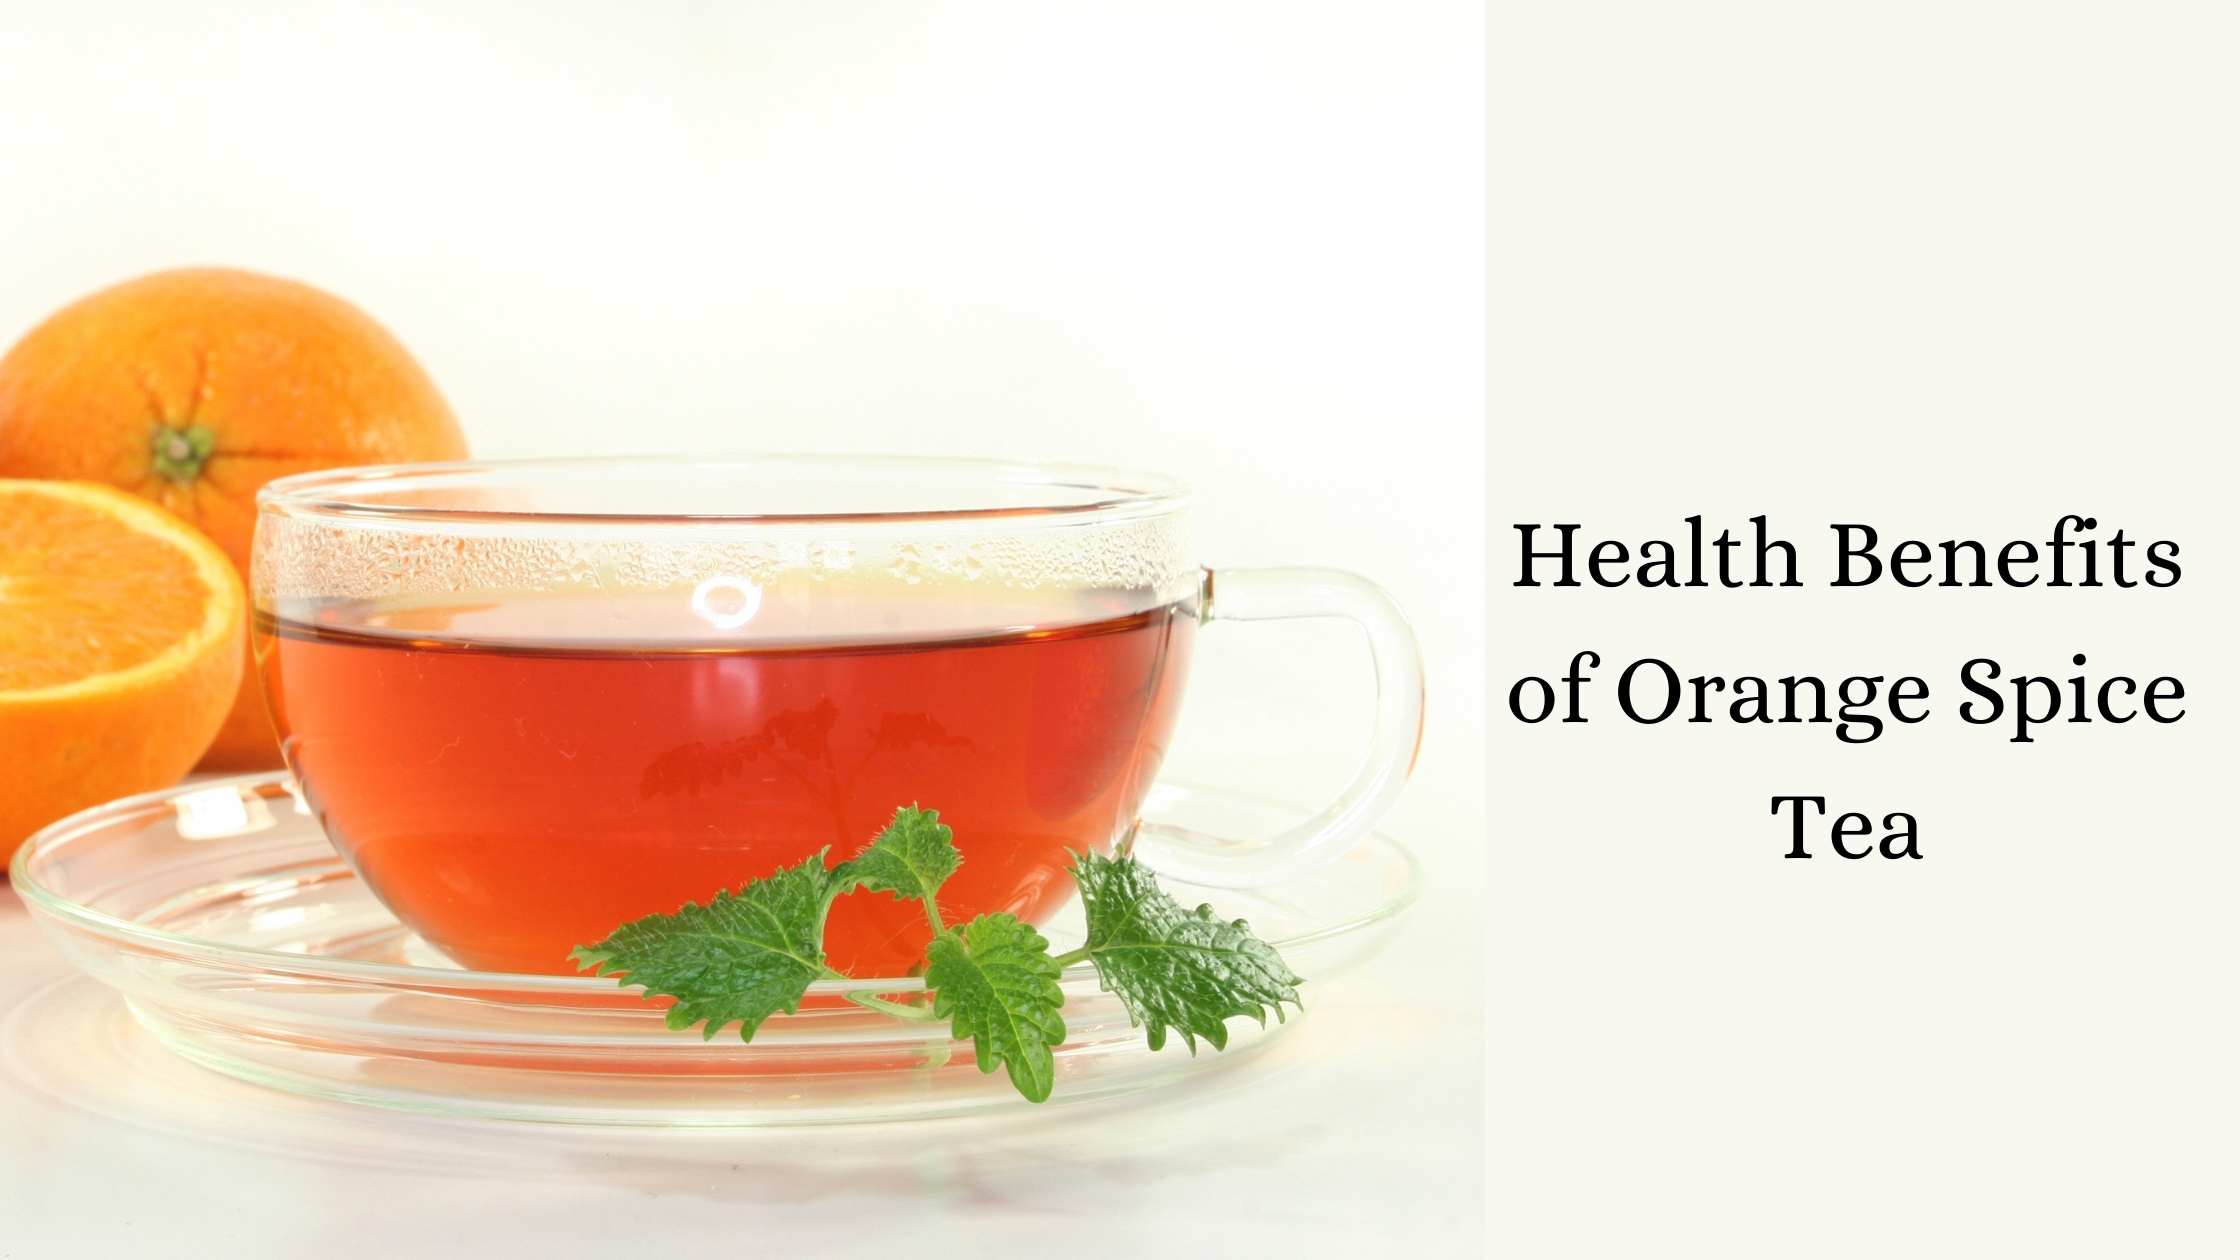 Health Benefits of Orange Spice Tea